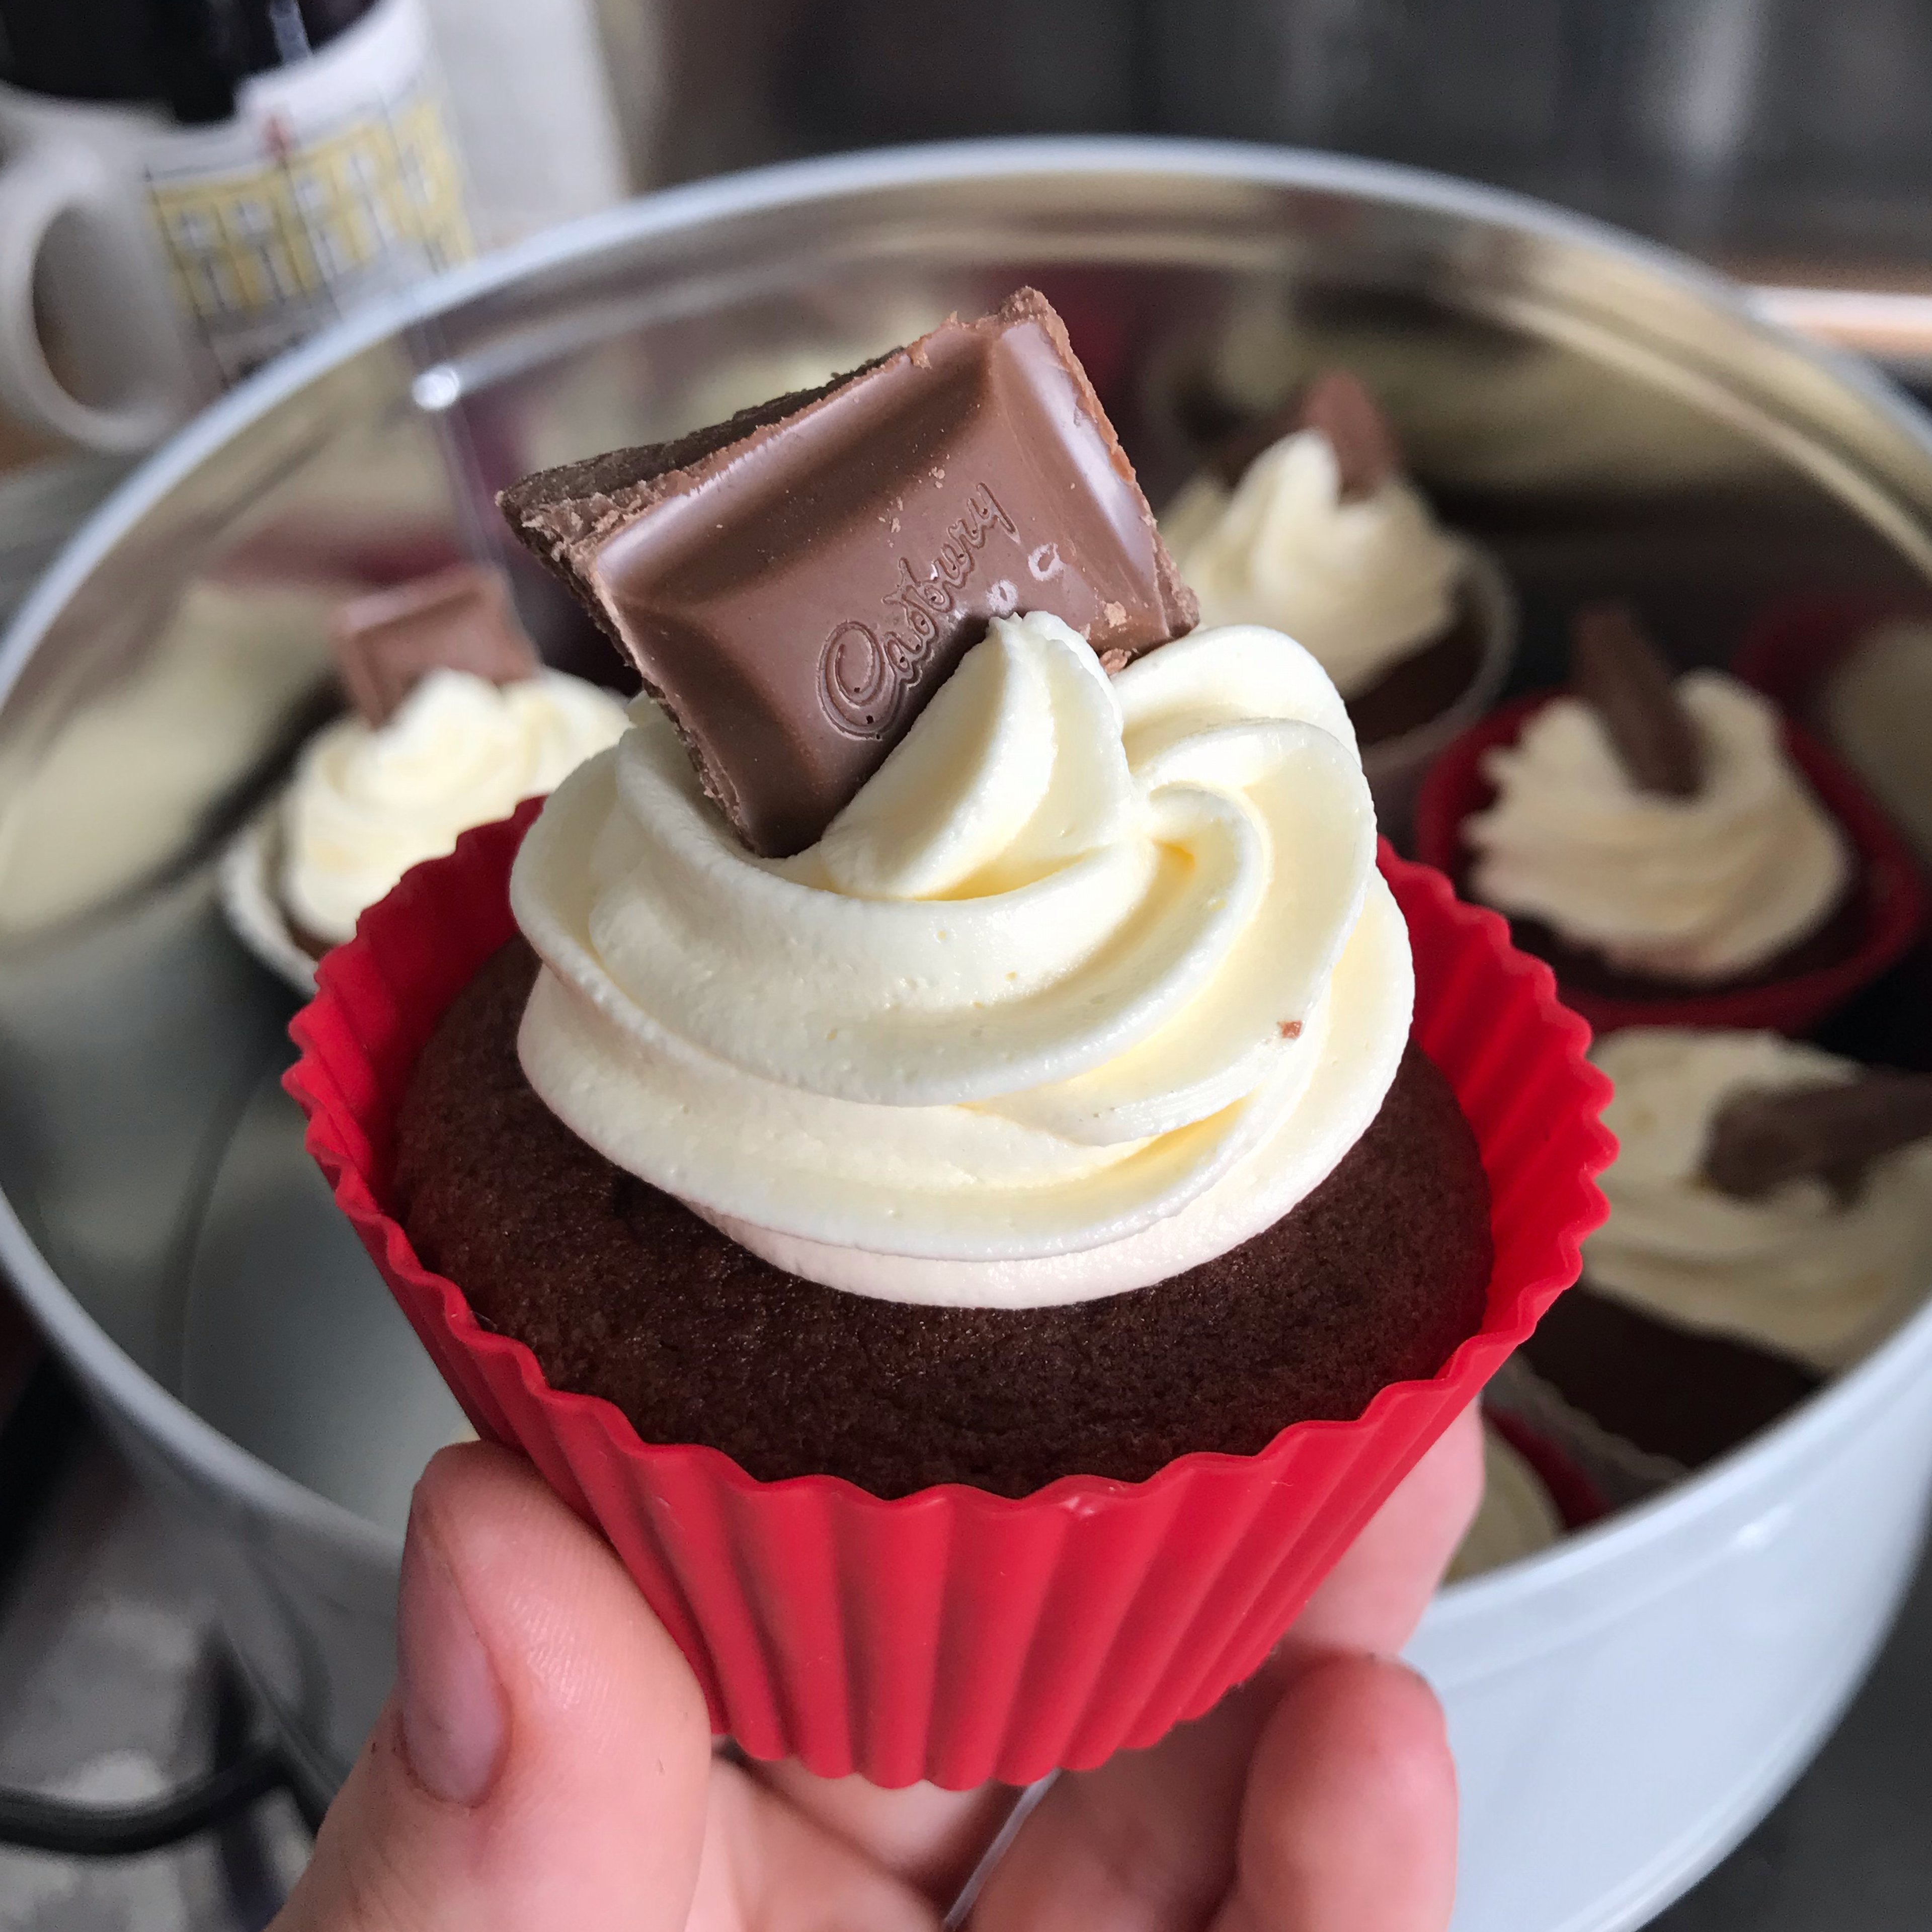 Chocolate & Vanilla Cupcakes